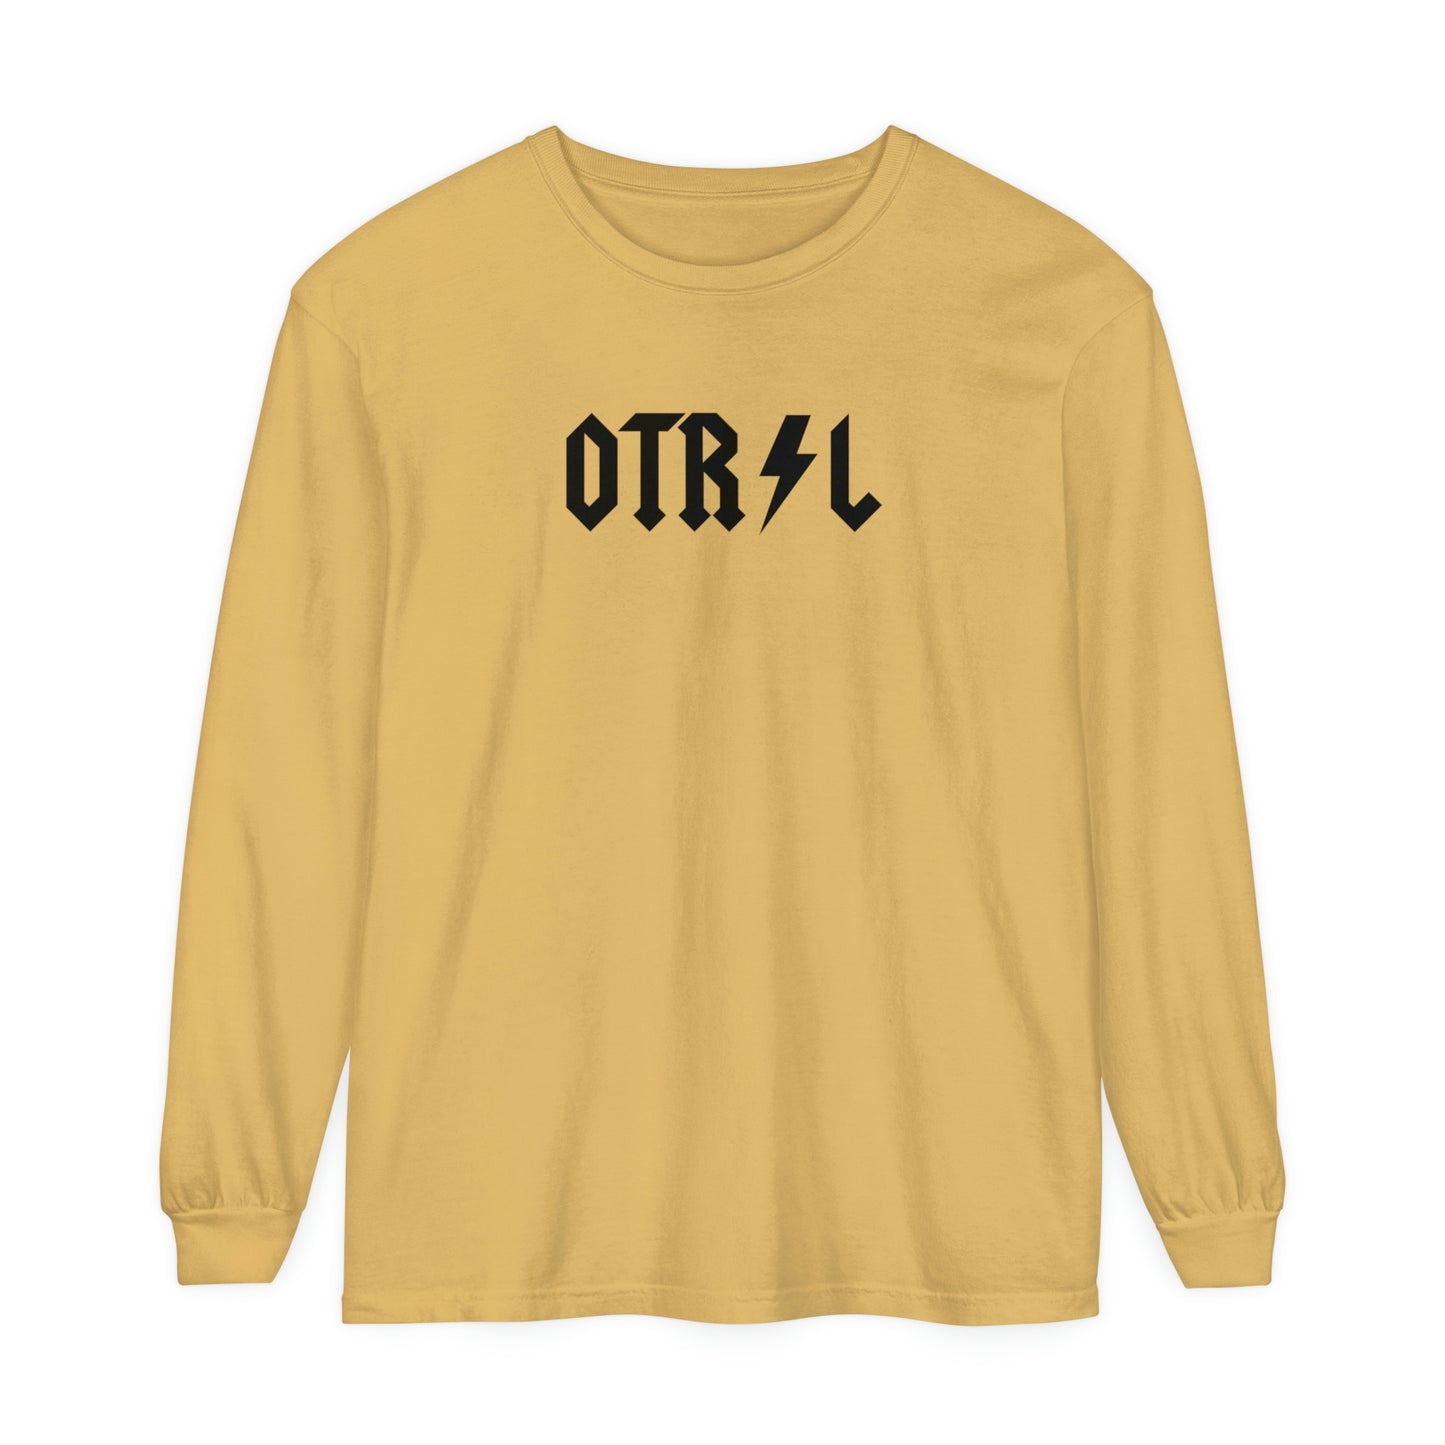 OTR/L Band Inspired Long Sleeve Comfort Colors T-Shirt